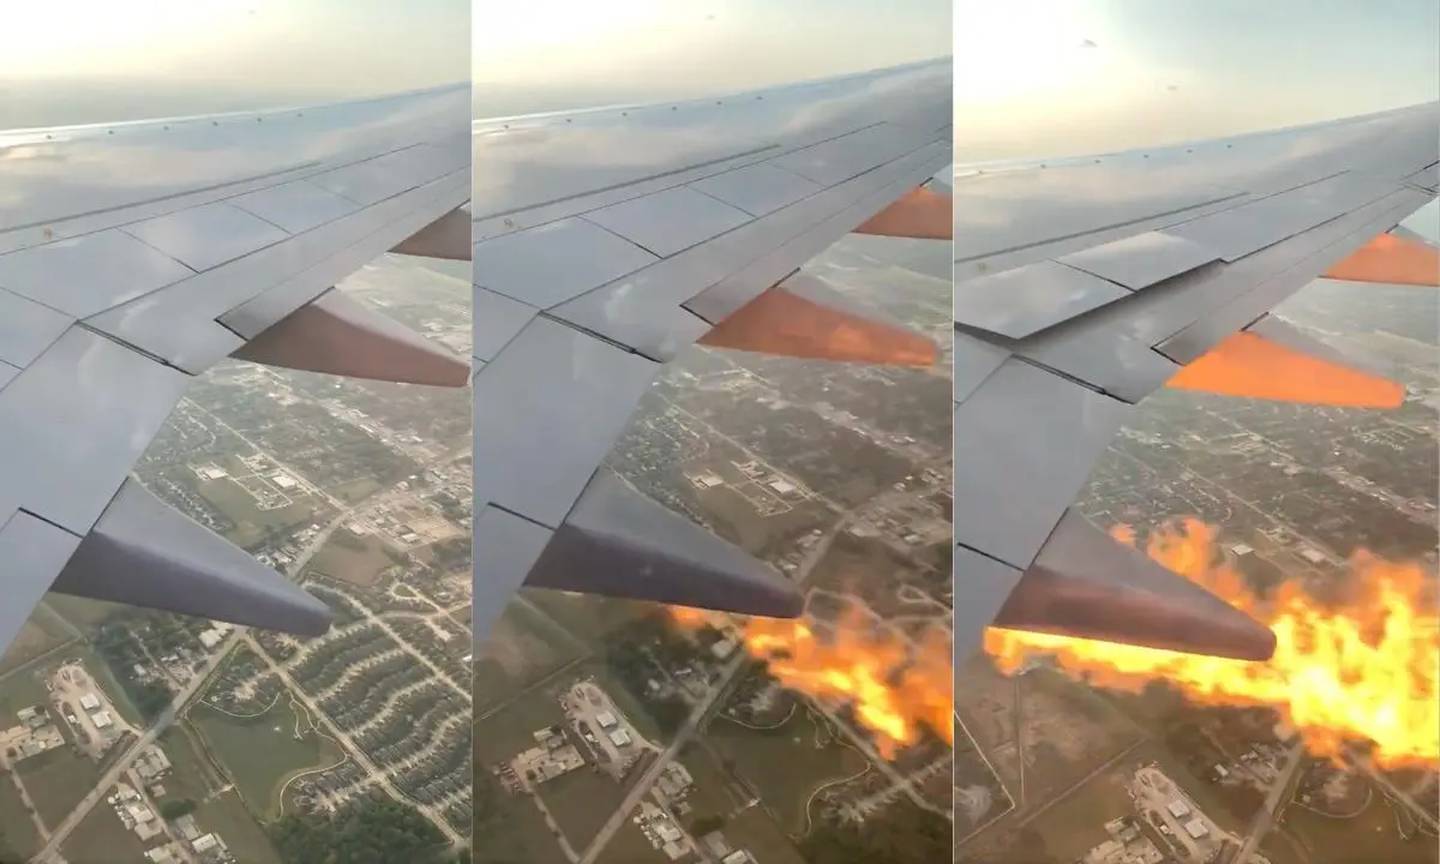 Ala de avión en llamas, suceso ocurrió en vuelo de Houston hacia Cancún.  Pasajeros entraron en pánico.